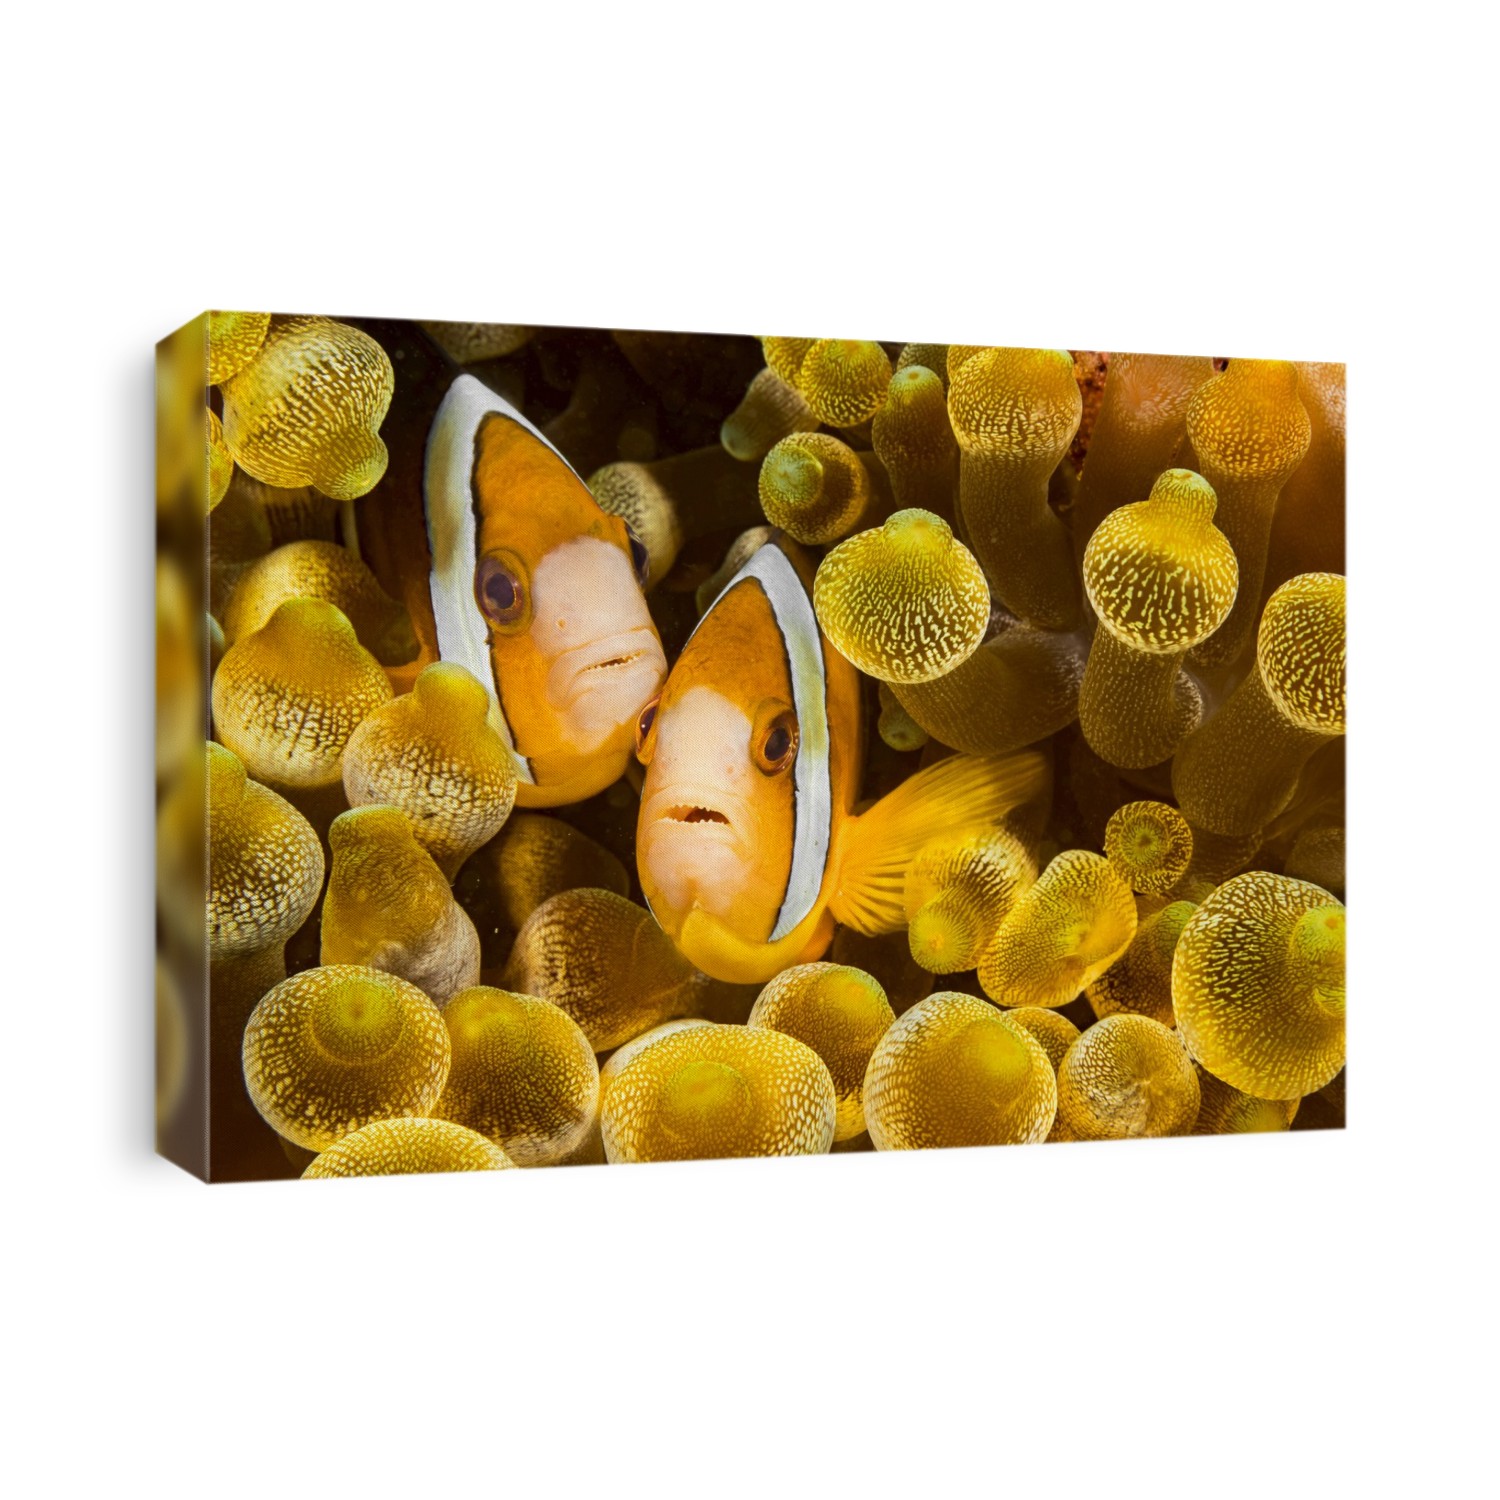 Clark's anemonefish (Amphiprion clarkii) in sea anemone (Entacmaea quadricolor); Philippines